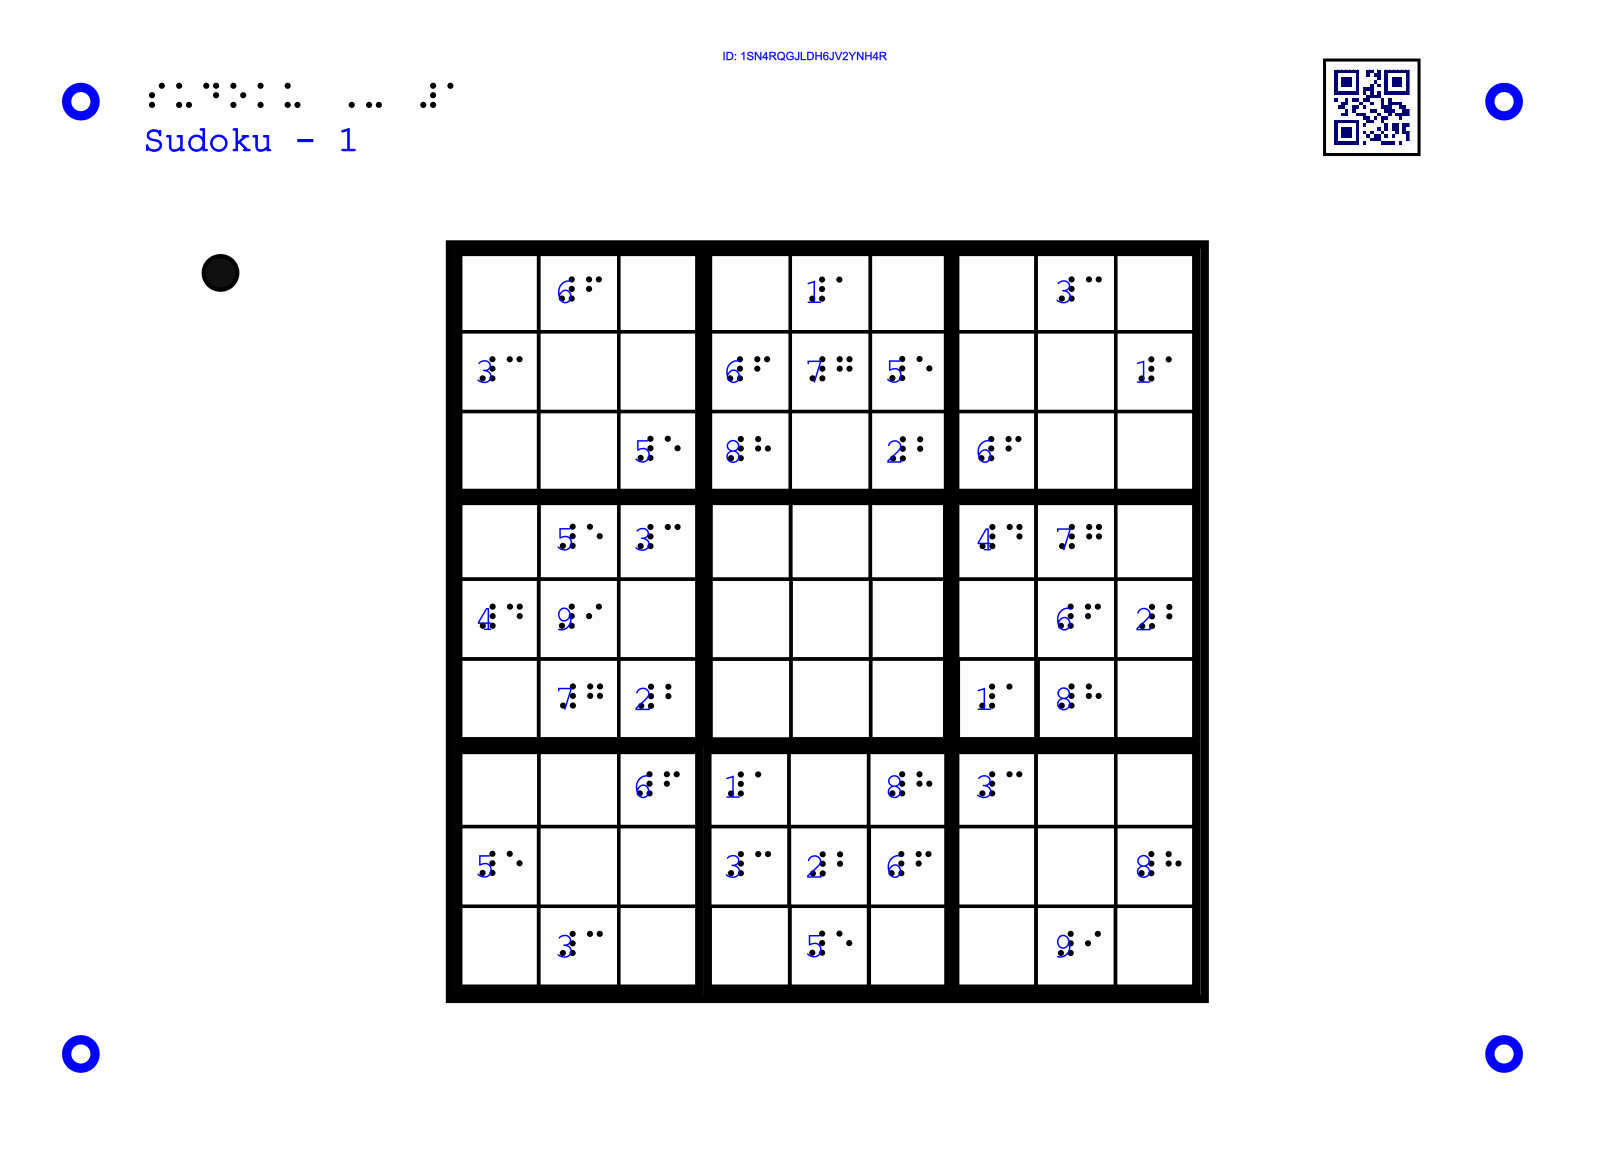 11Tactile version of sudoku